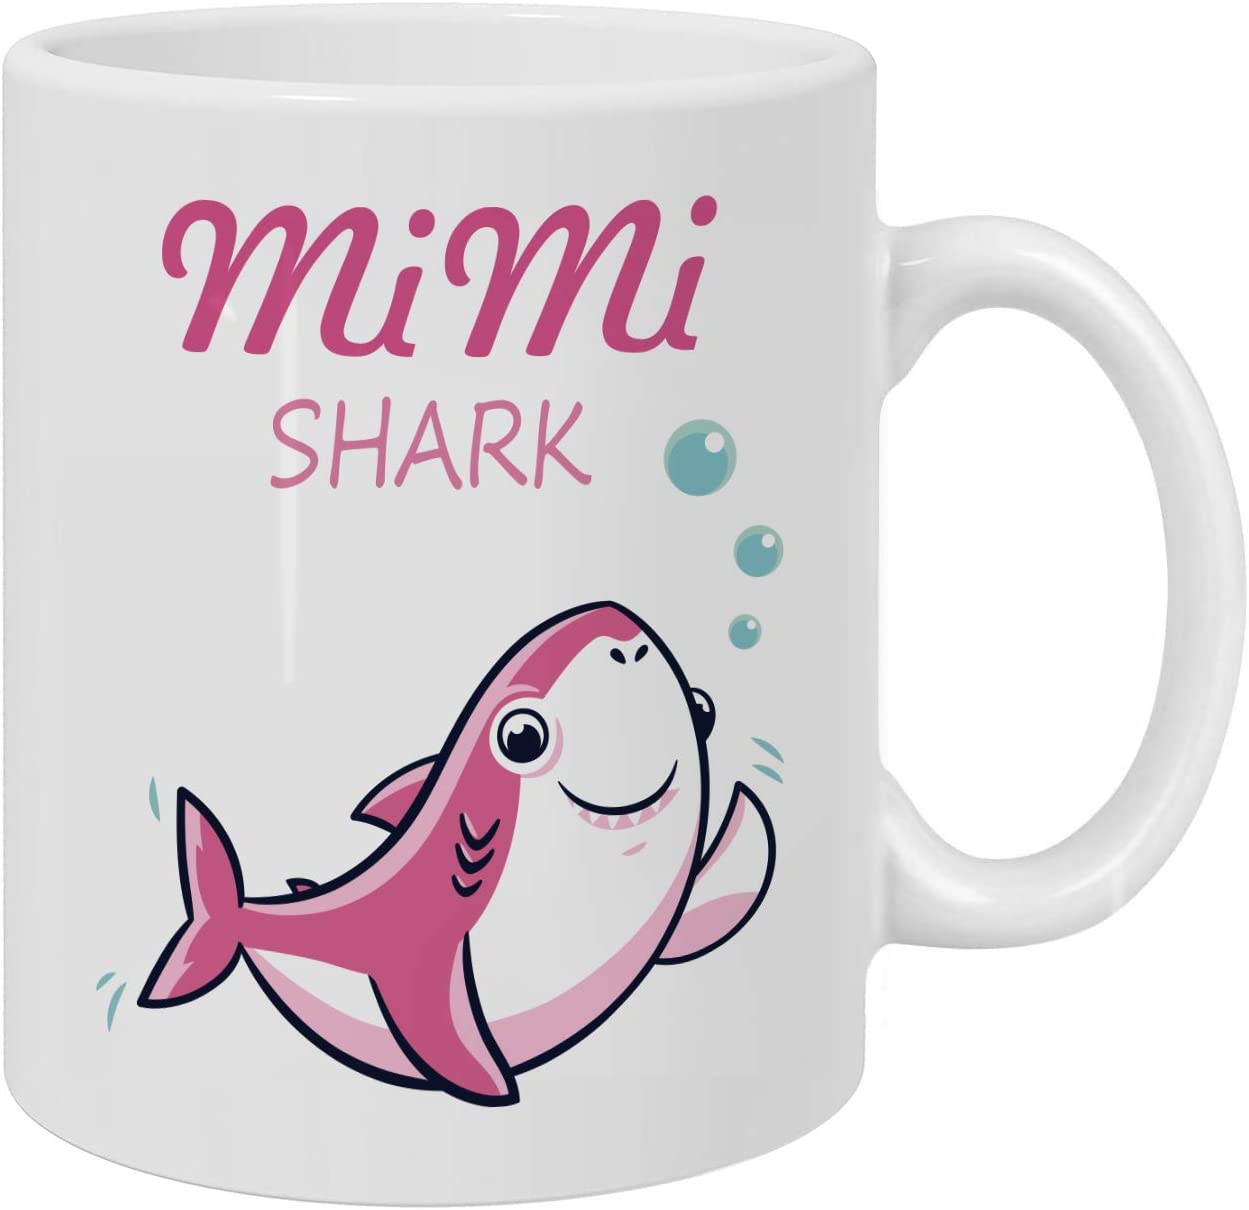 Mimi Shark Mug